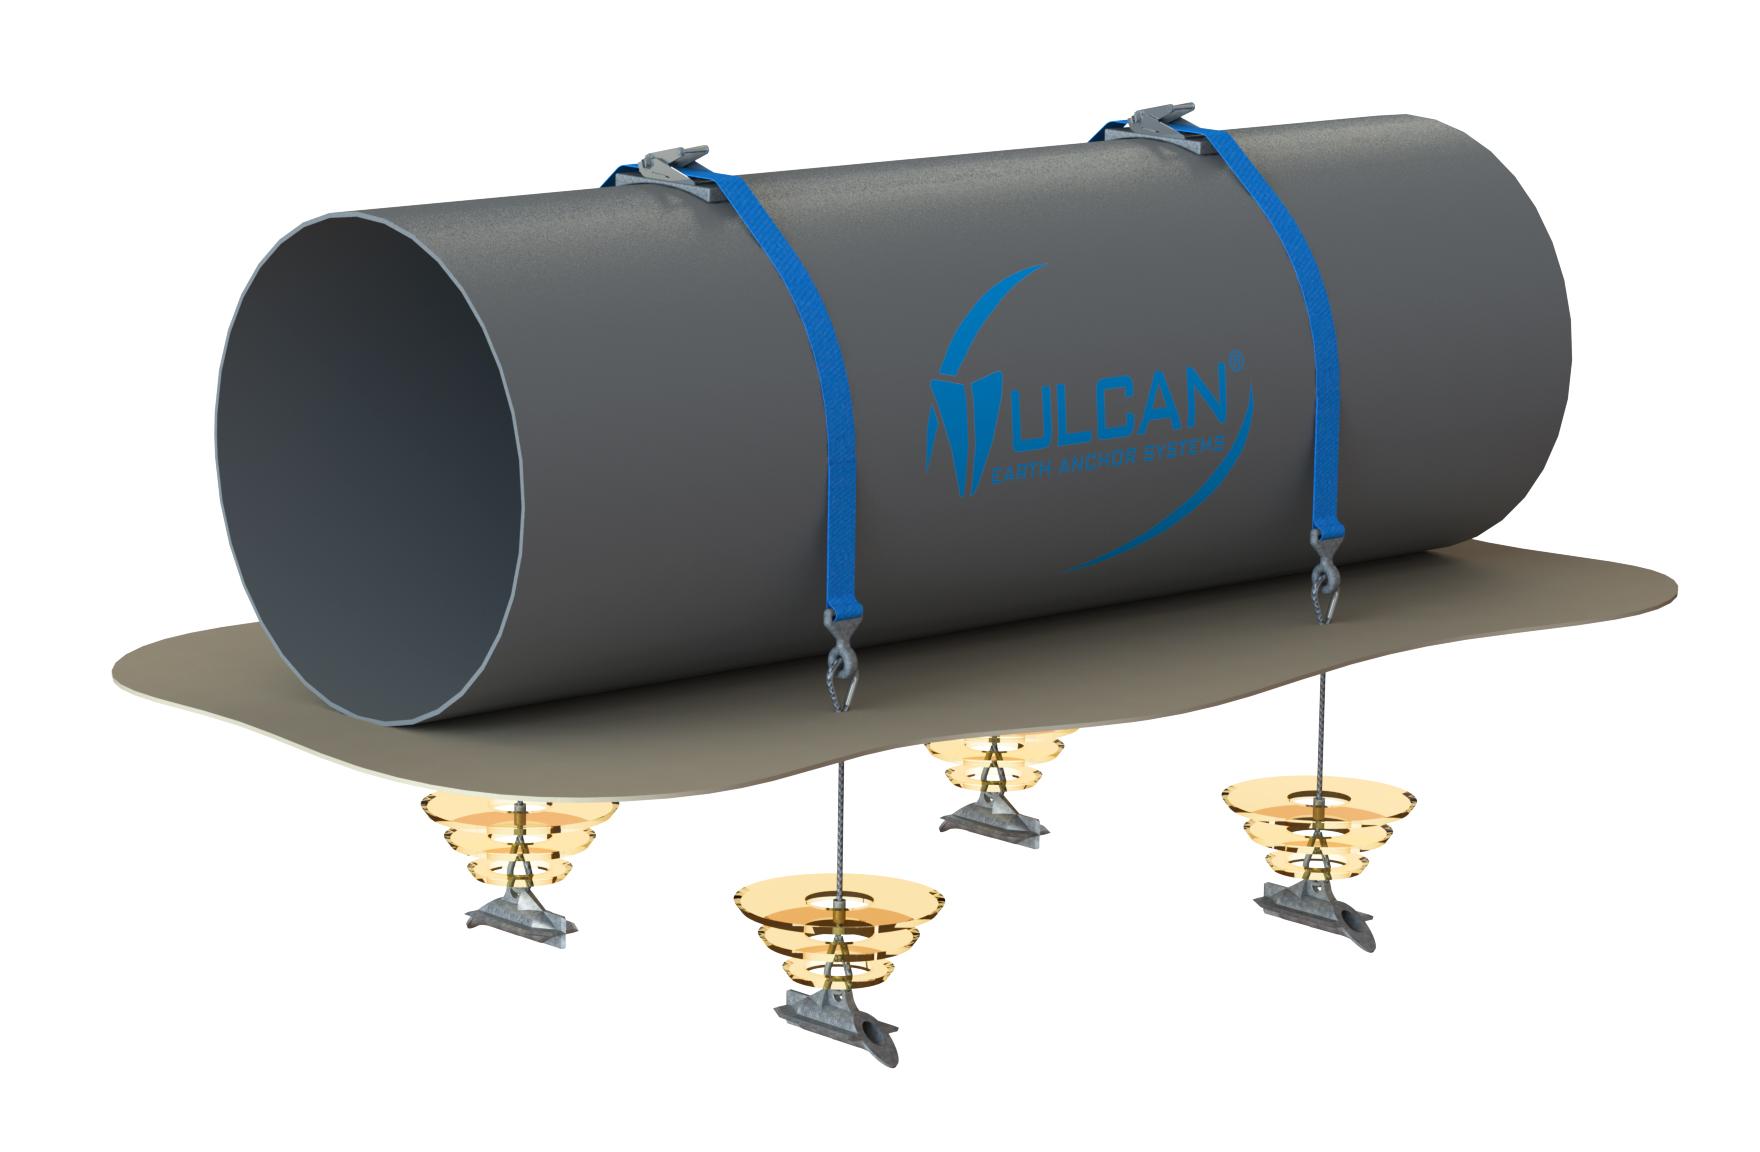 Pipeline installation using vulcan anchoring system